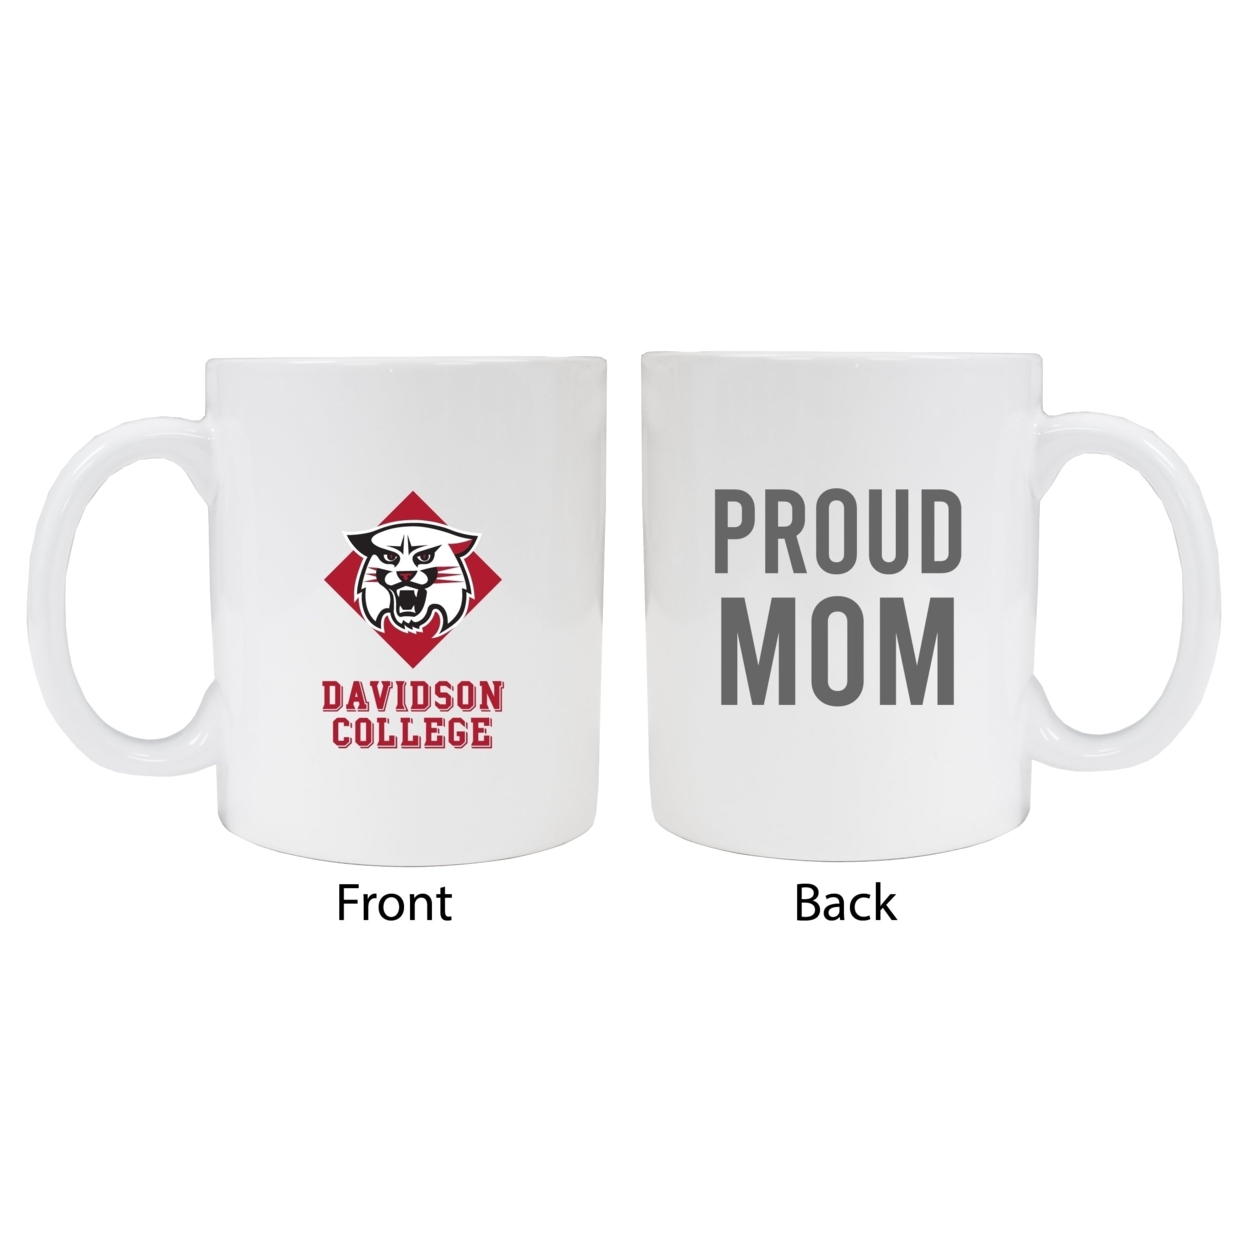 Davidson College Proud Mom Ceramic Coffee Mug - White (2 Pack)